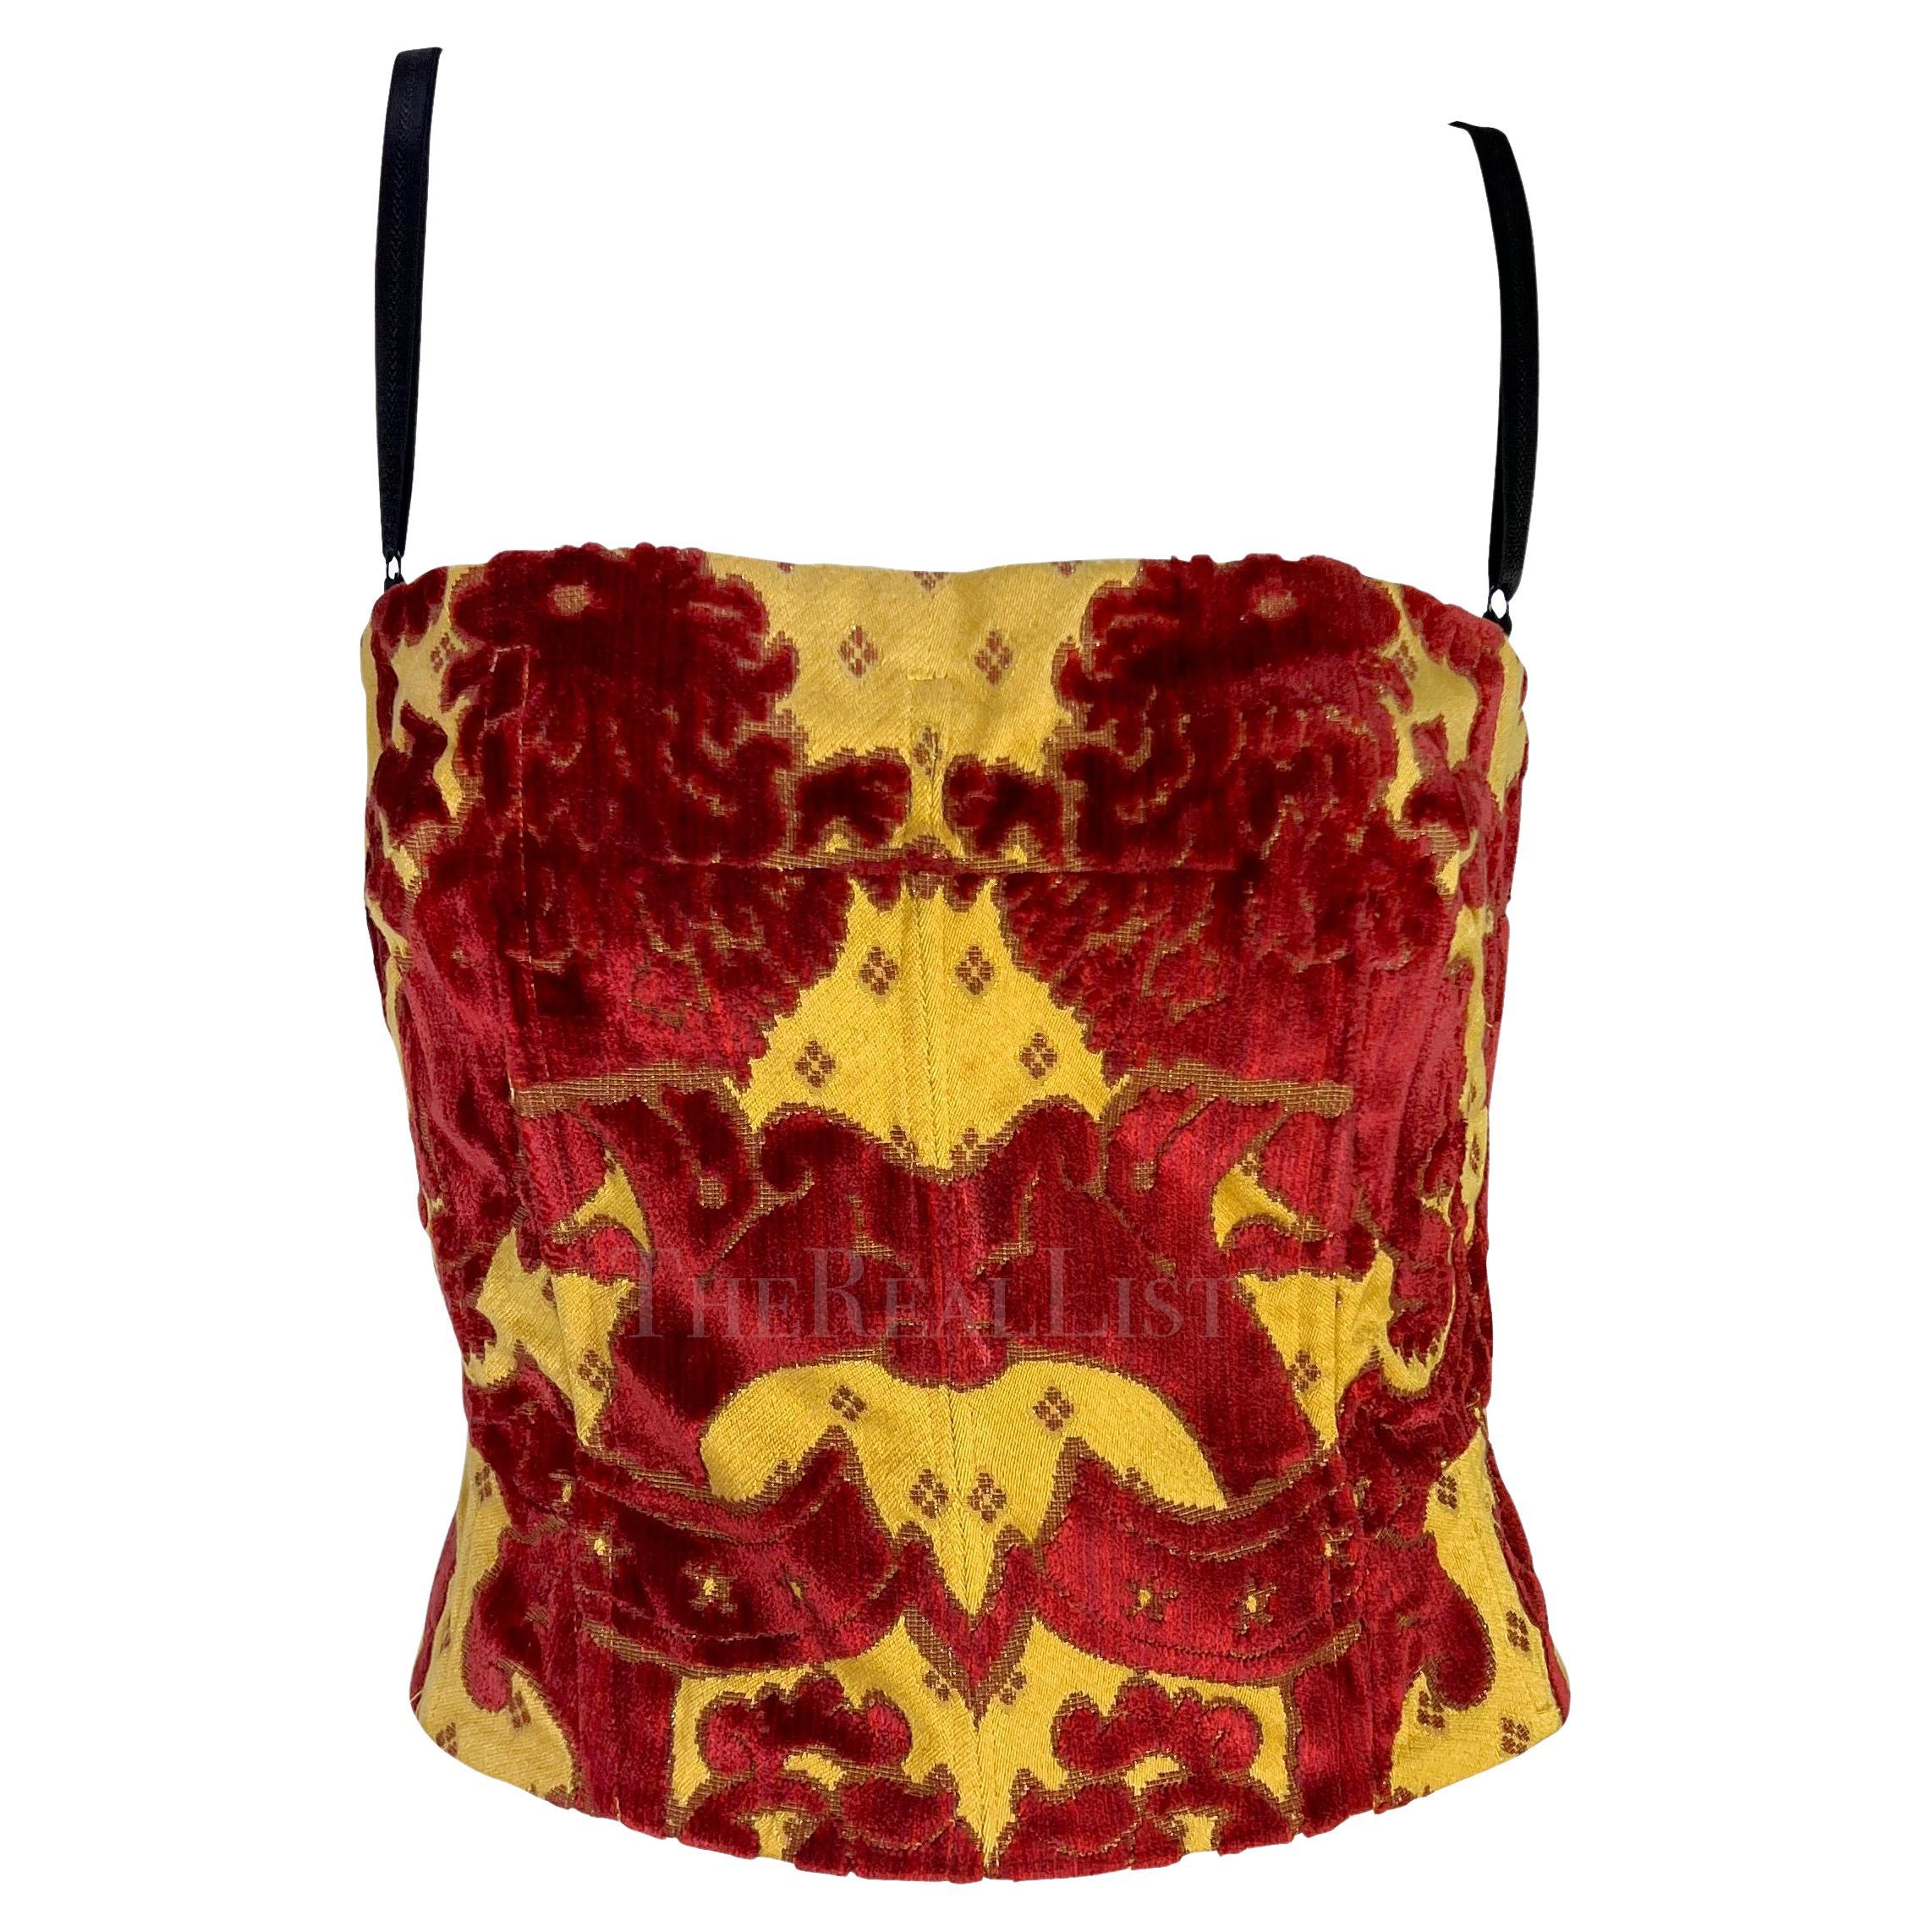 S/S 2000 Dolce & Gabbana Runway Ad Red Gold Velvet Tapestry Corset Bustier For Sale